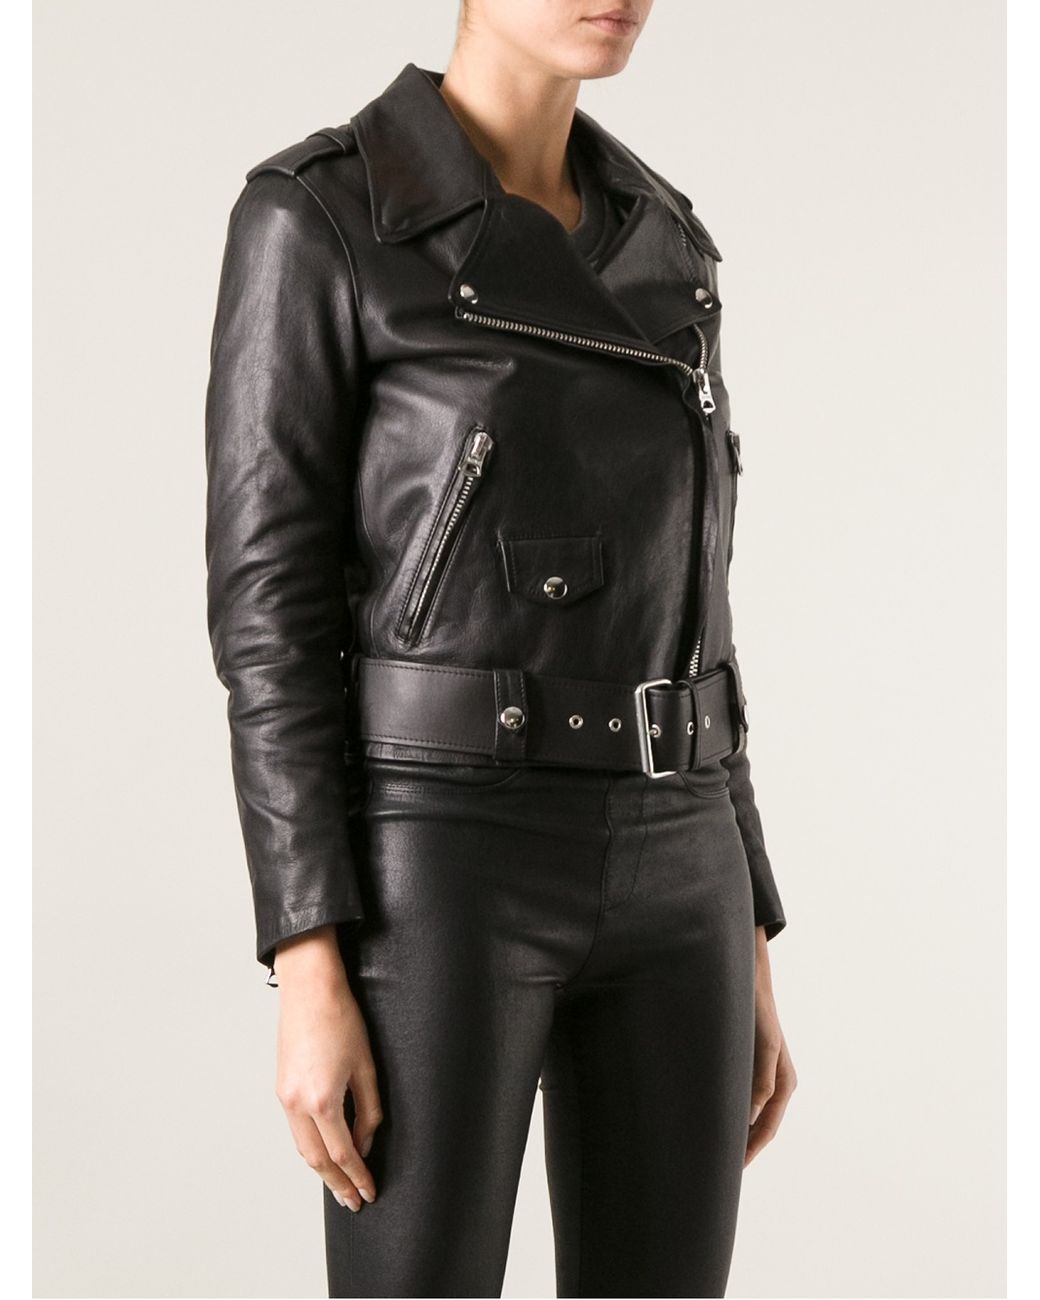 Acne Studios Mape Leather Jacket in Black | Lyst